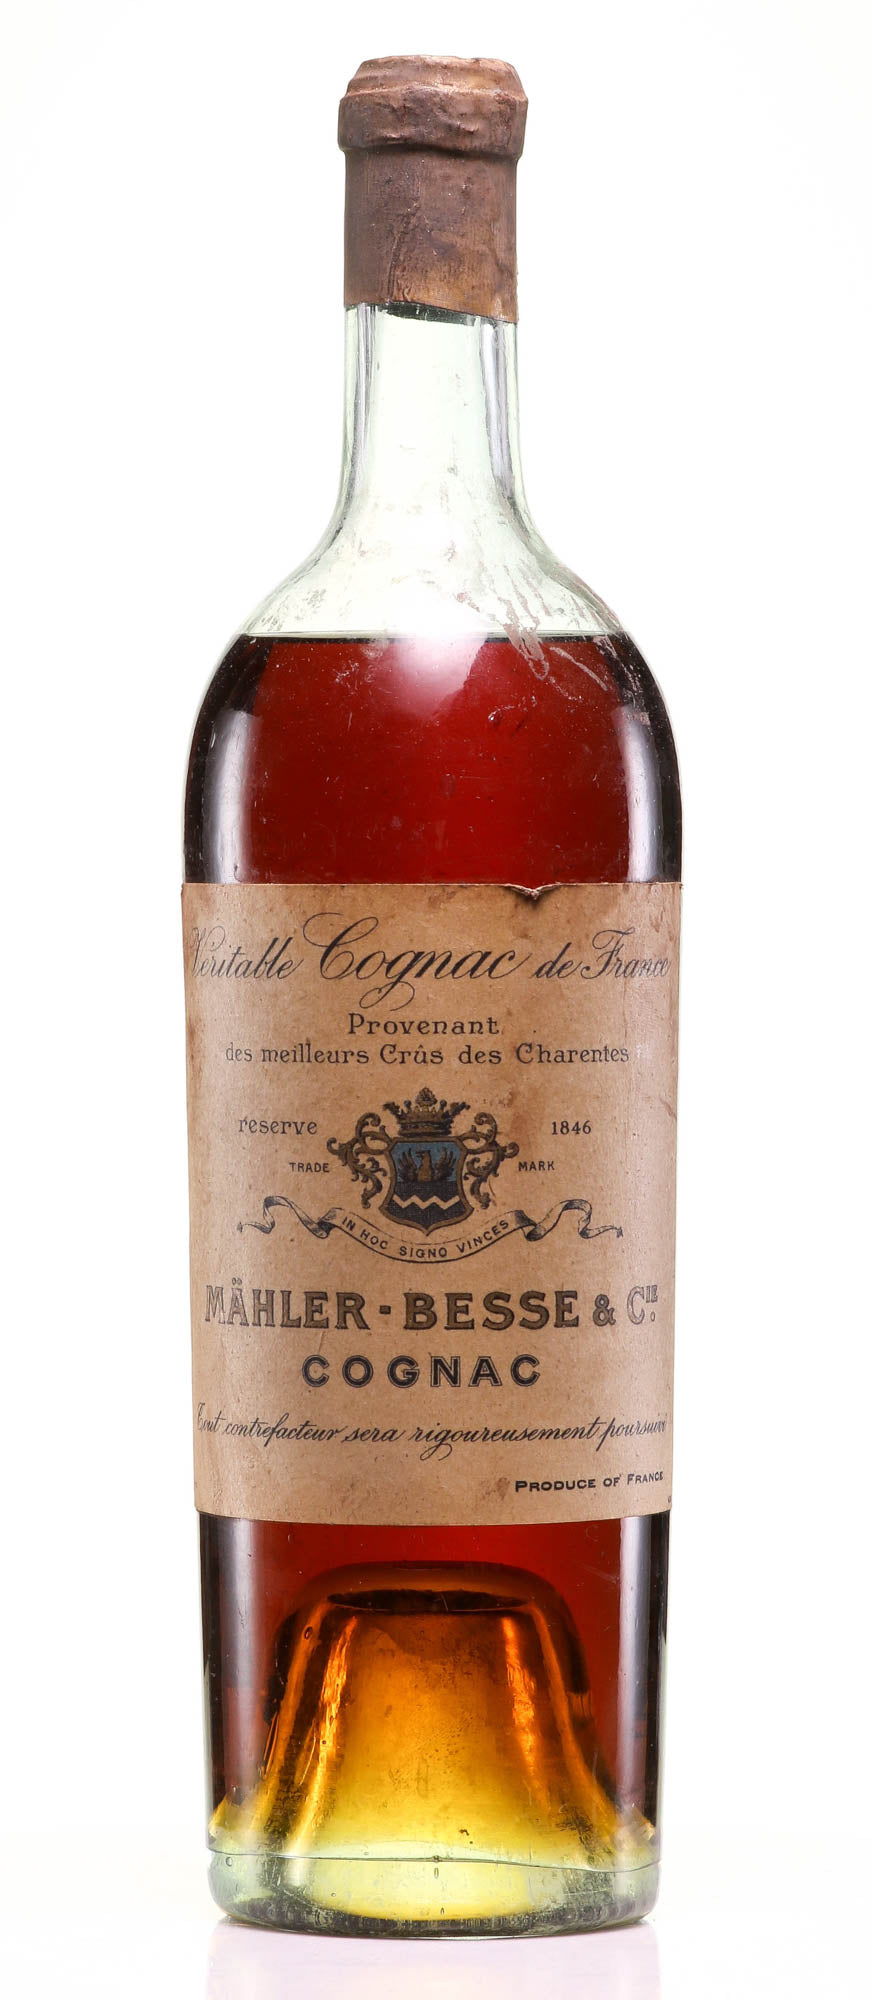 Mahler-Besse & Co. 1846 Cognac, France - Rue Pinard